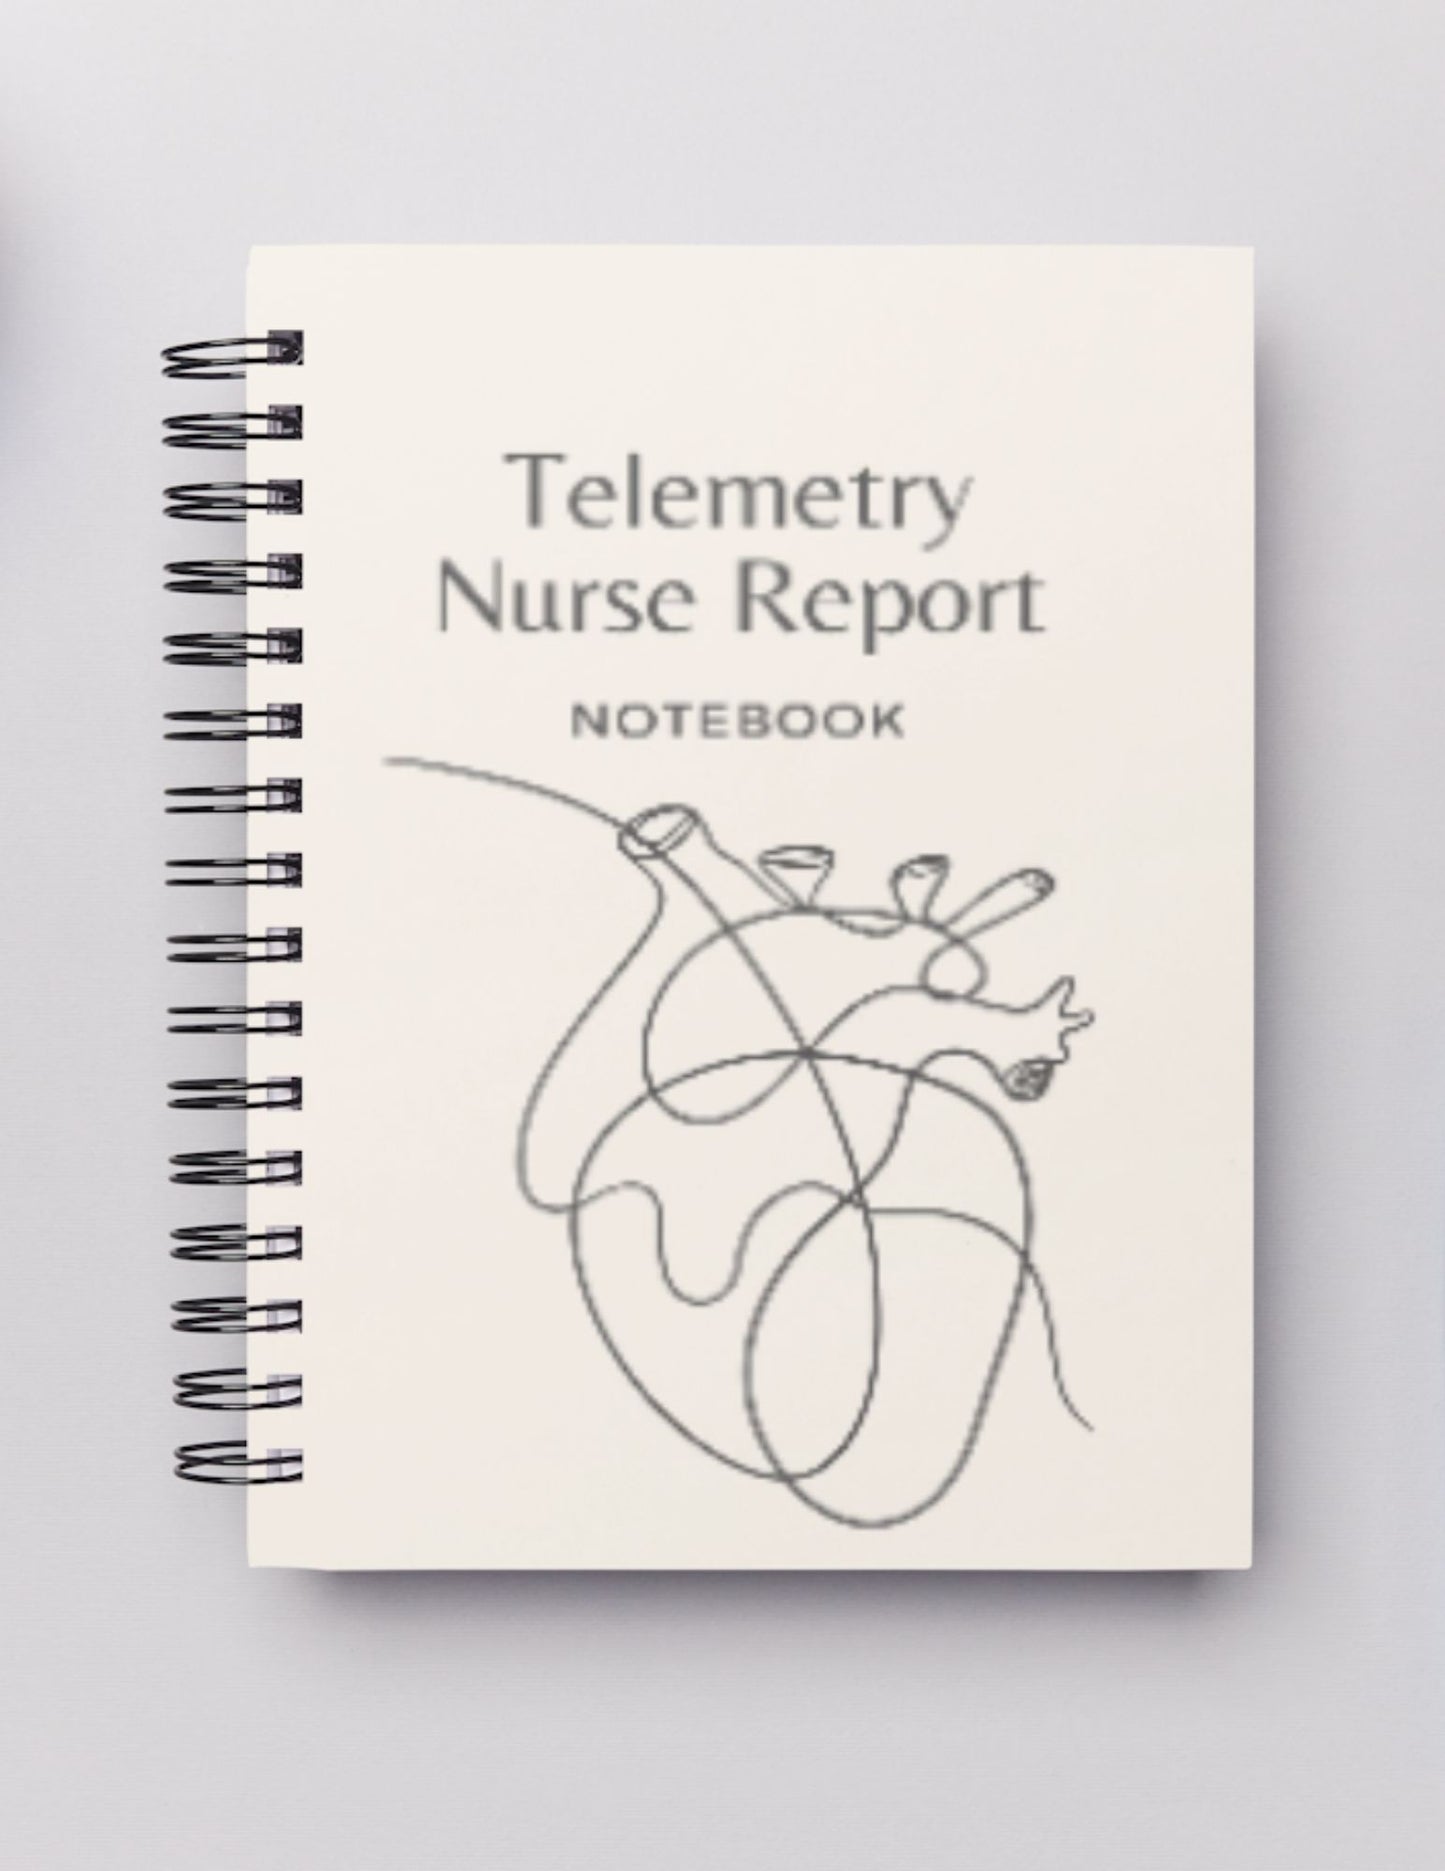 Telemetry (2 patients) Nurse Report Notebook